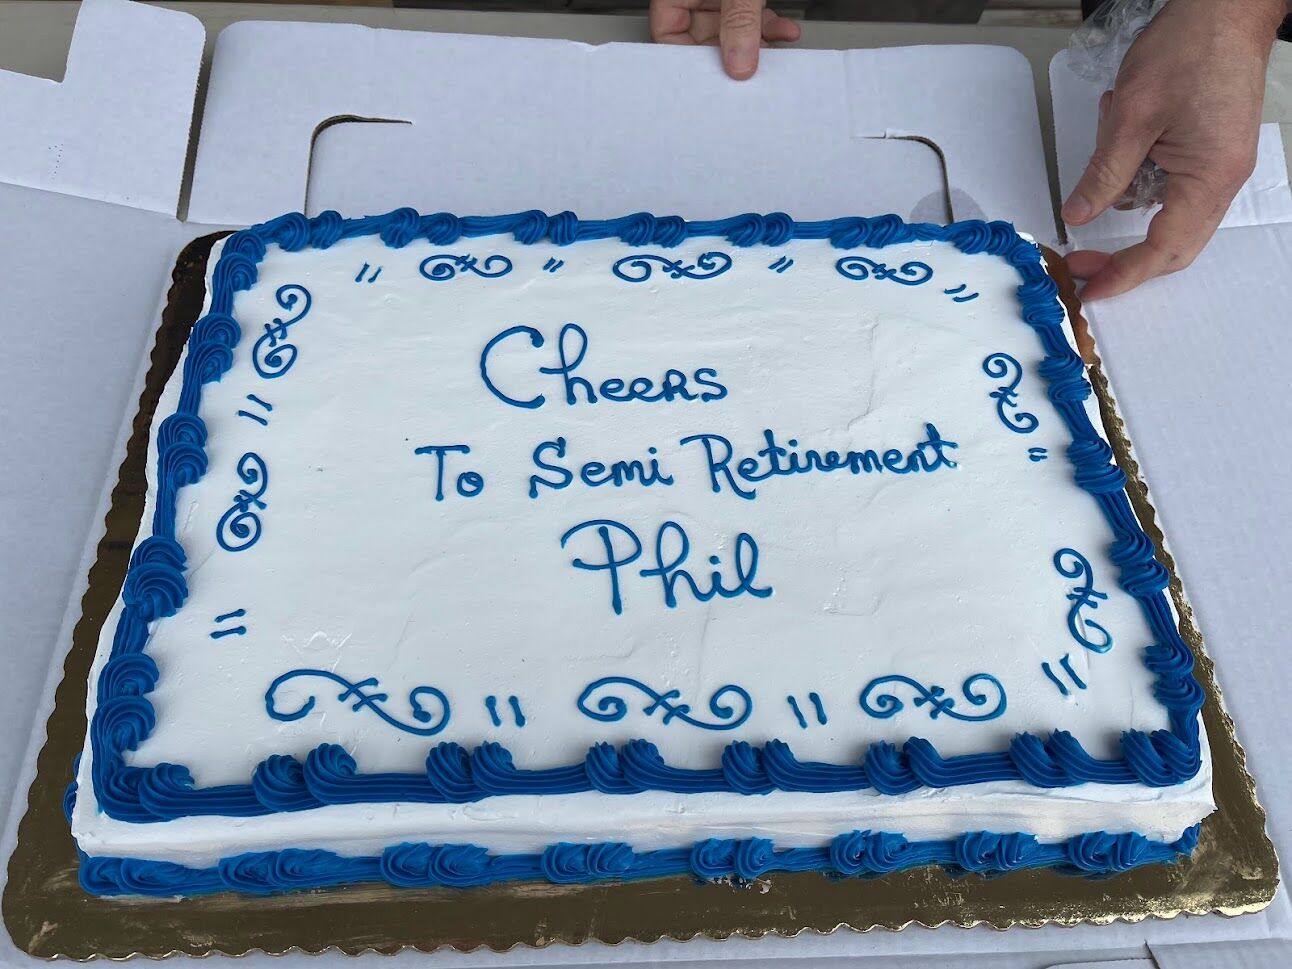 The cake at Phil's semiretirement.